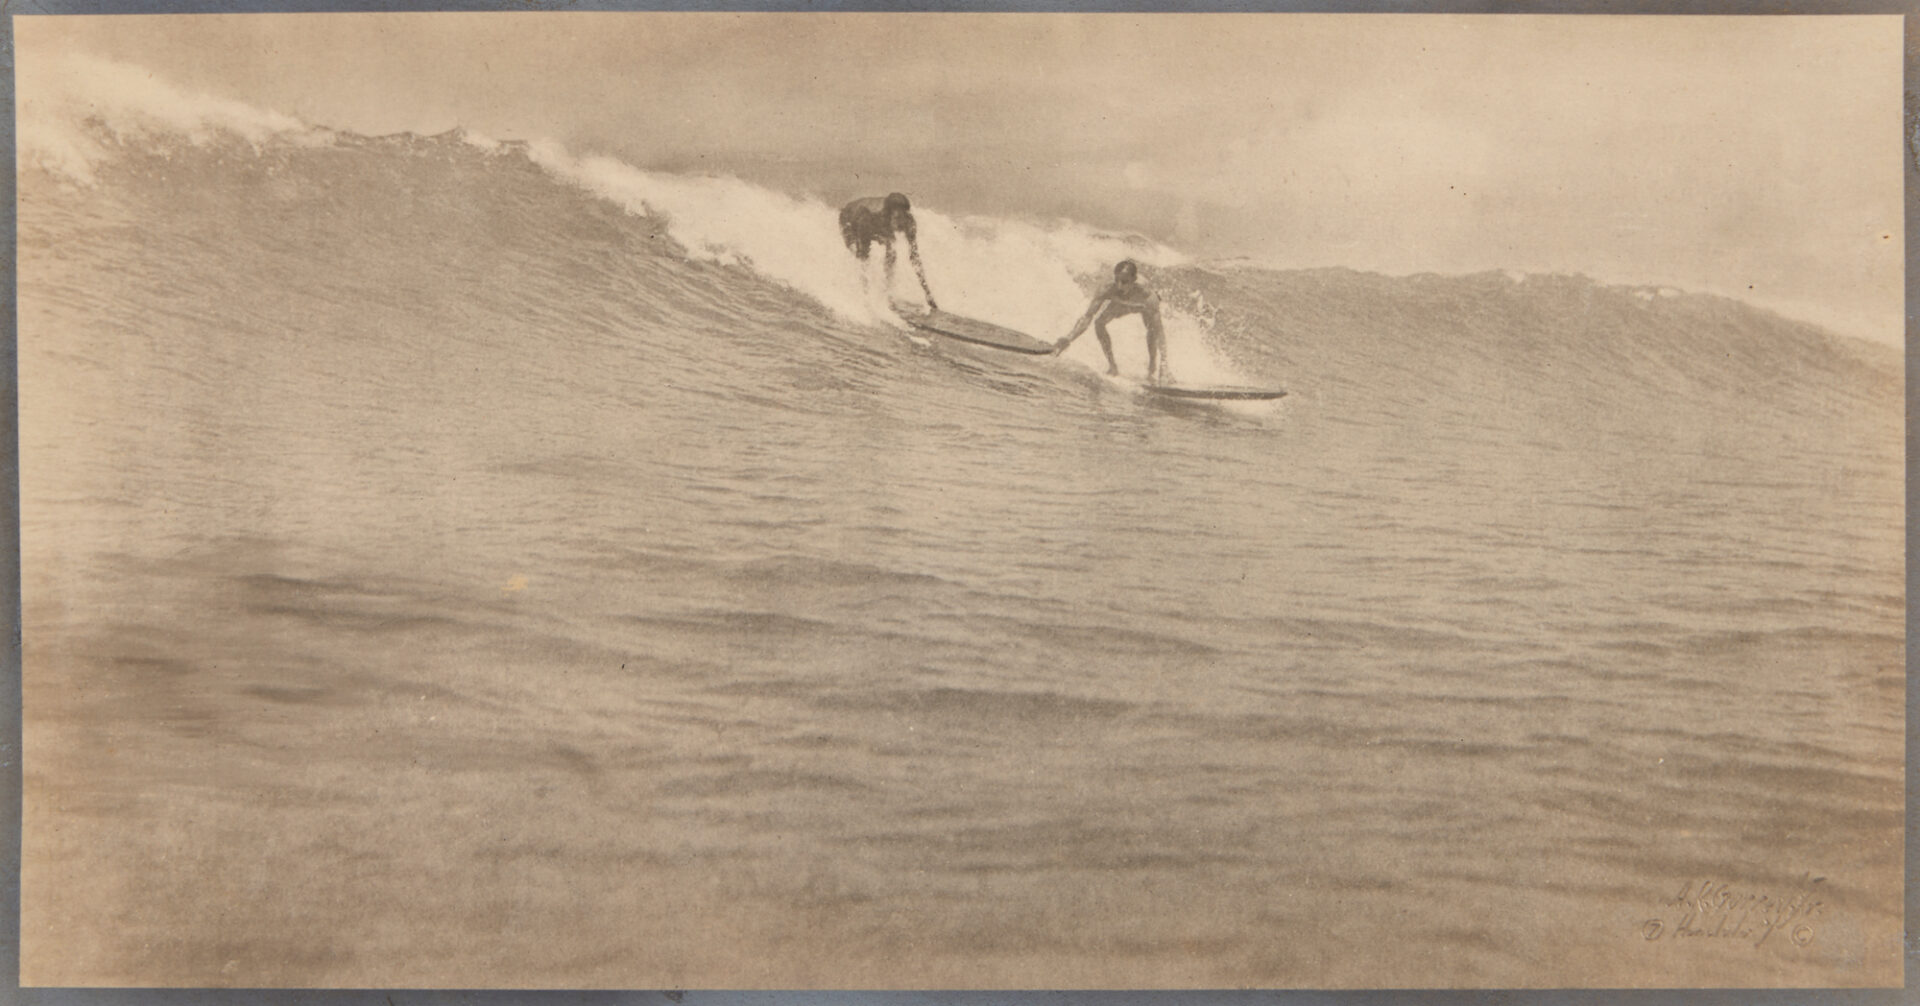 Lot 700: Scarce A.R. Gurrey book: Surf Riders of Hawaii, c. 1911-15